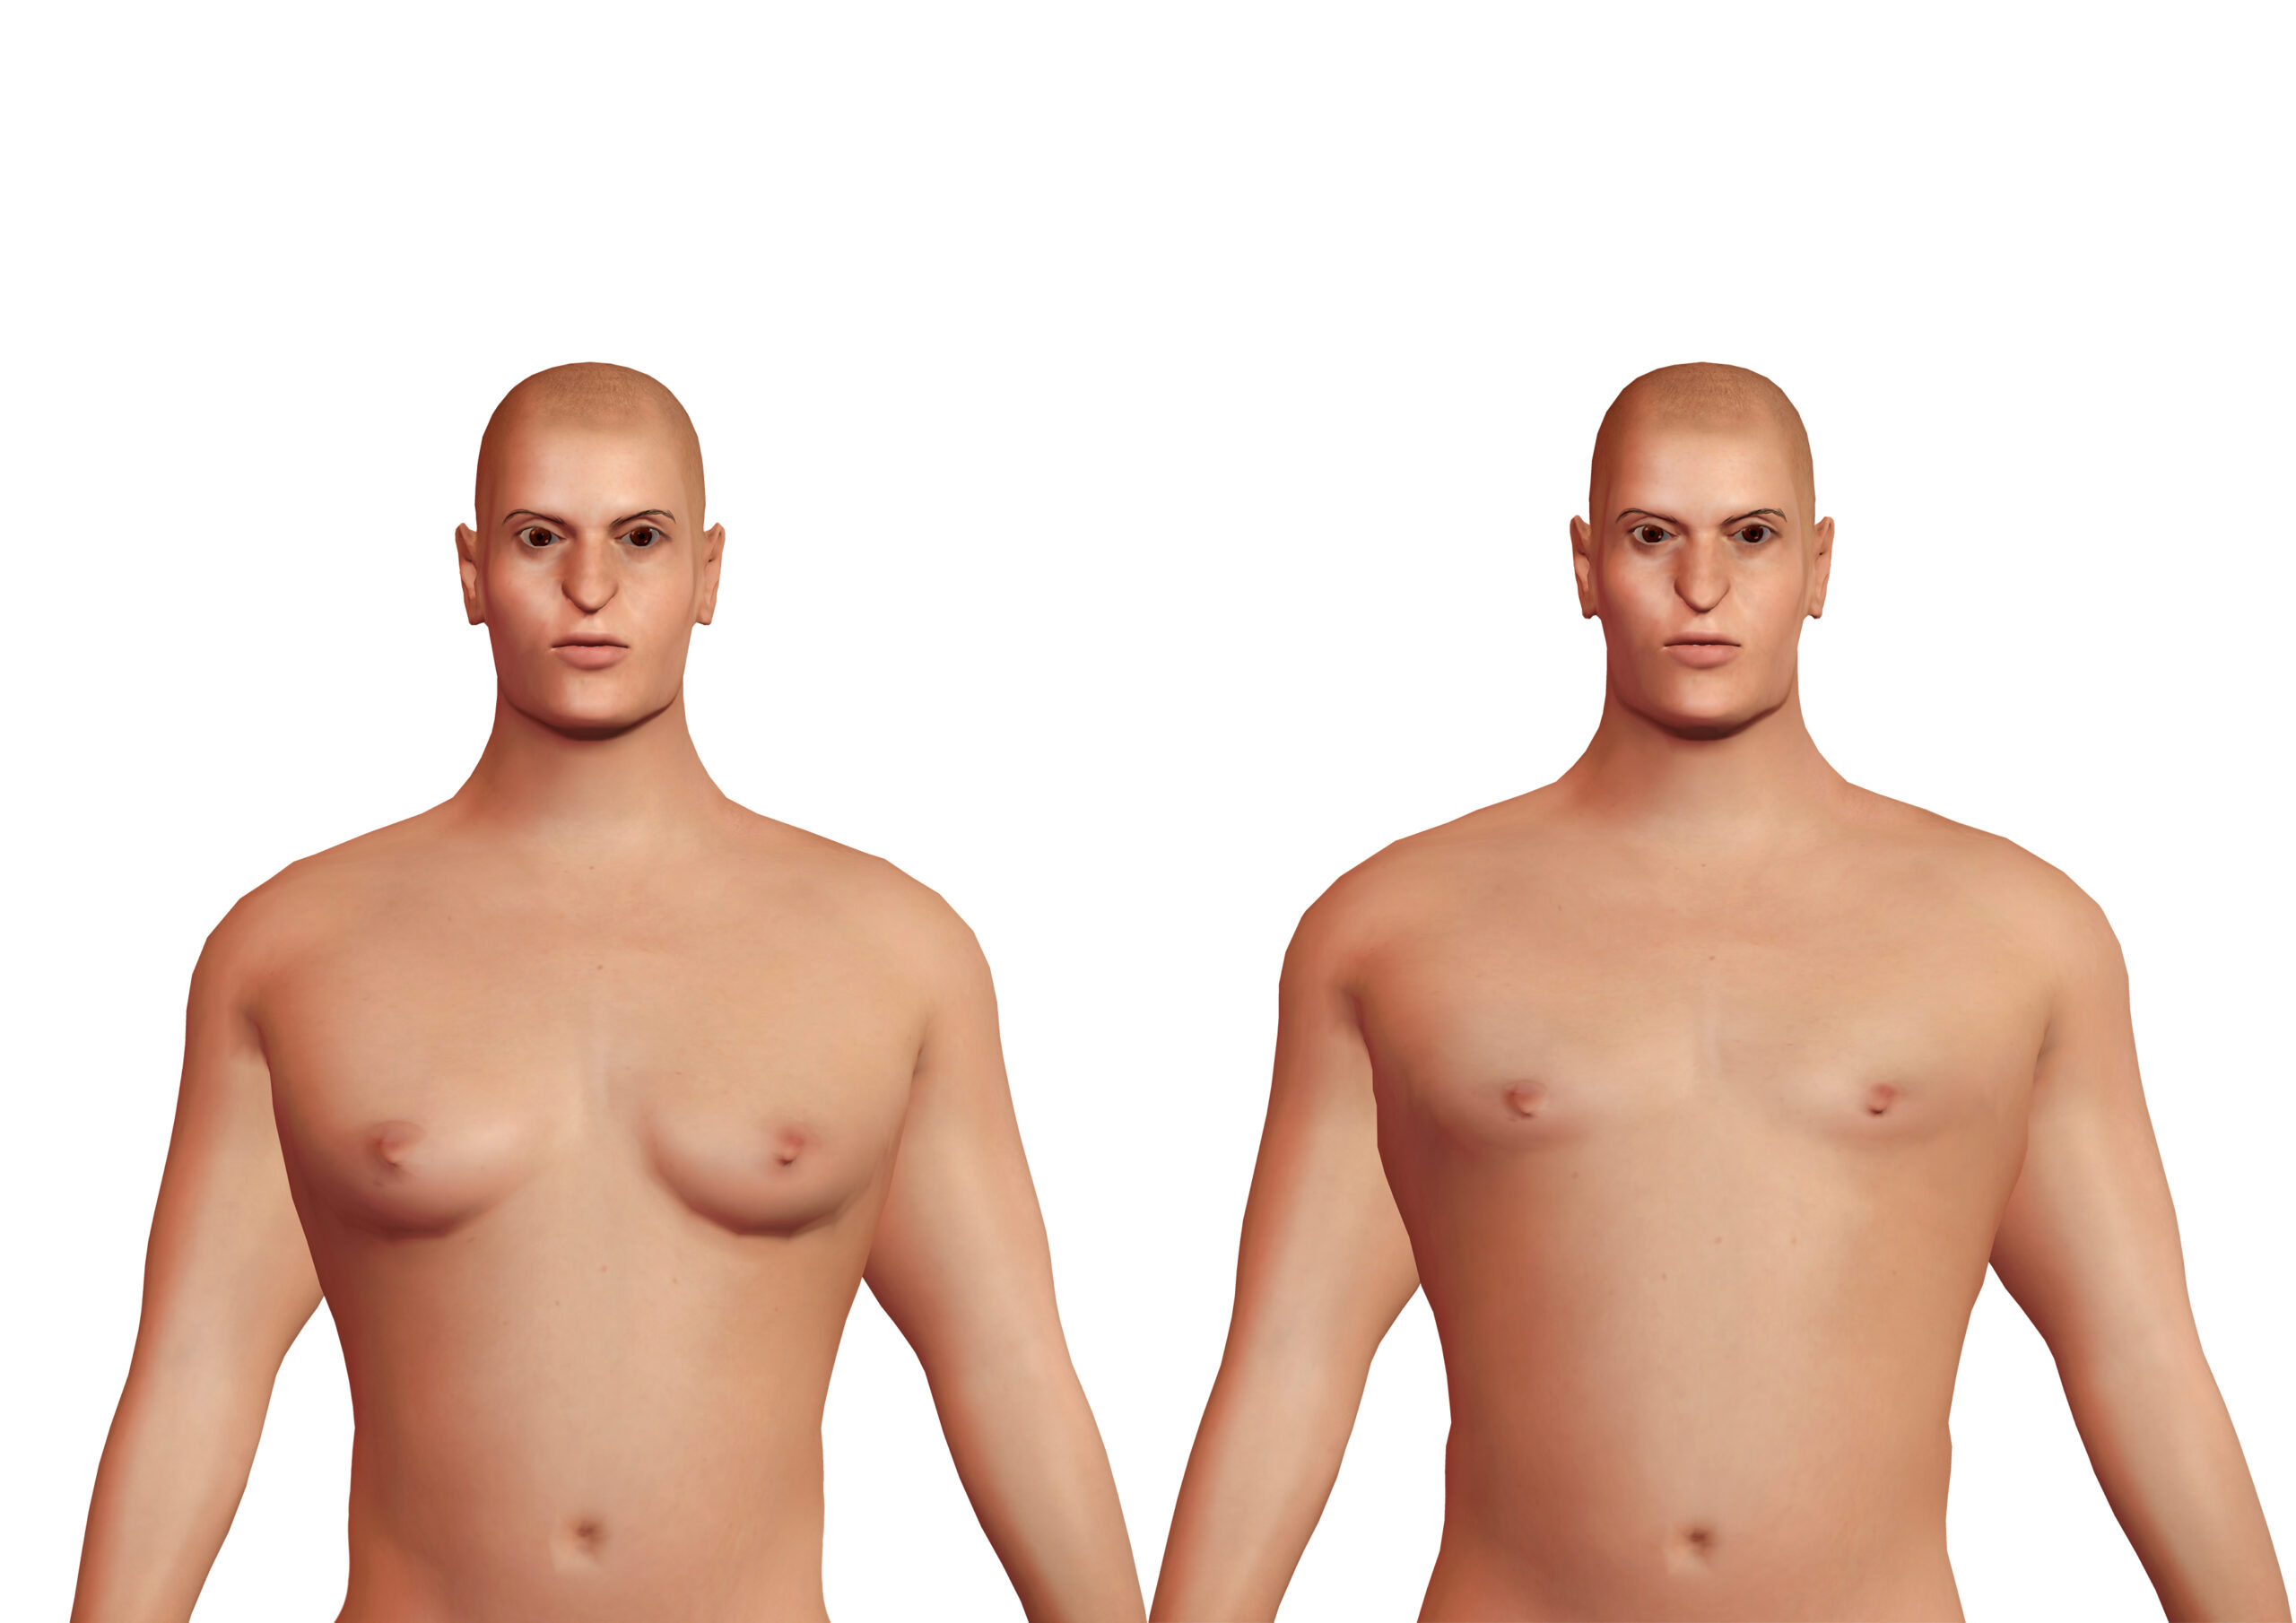 для мужчин важна форма груди фото 60